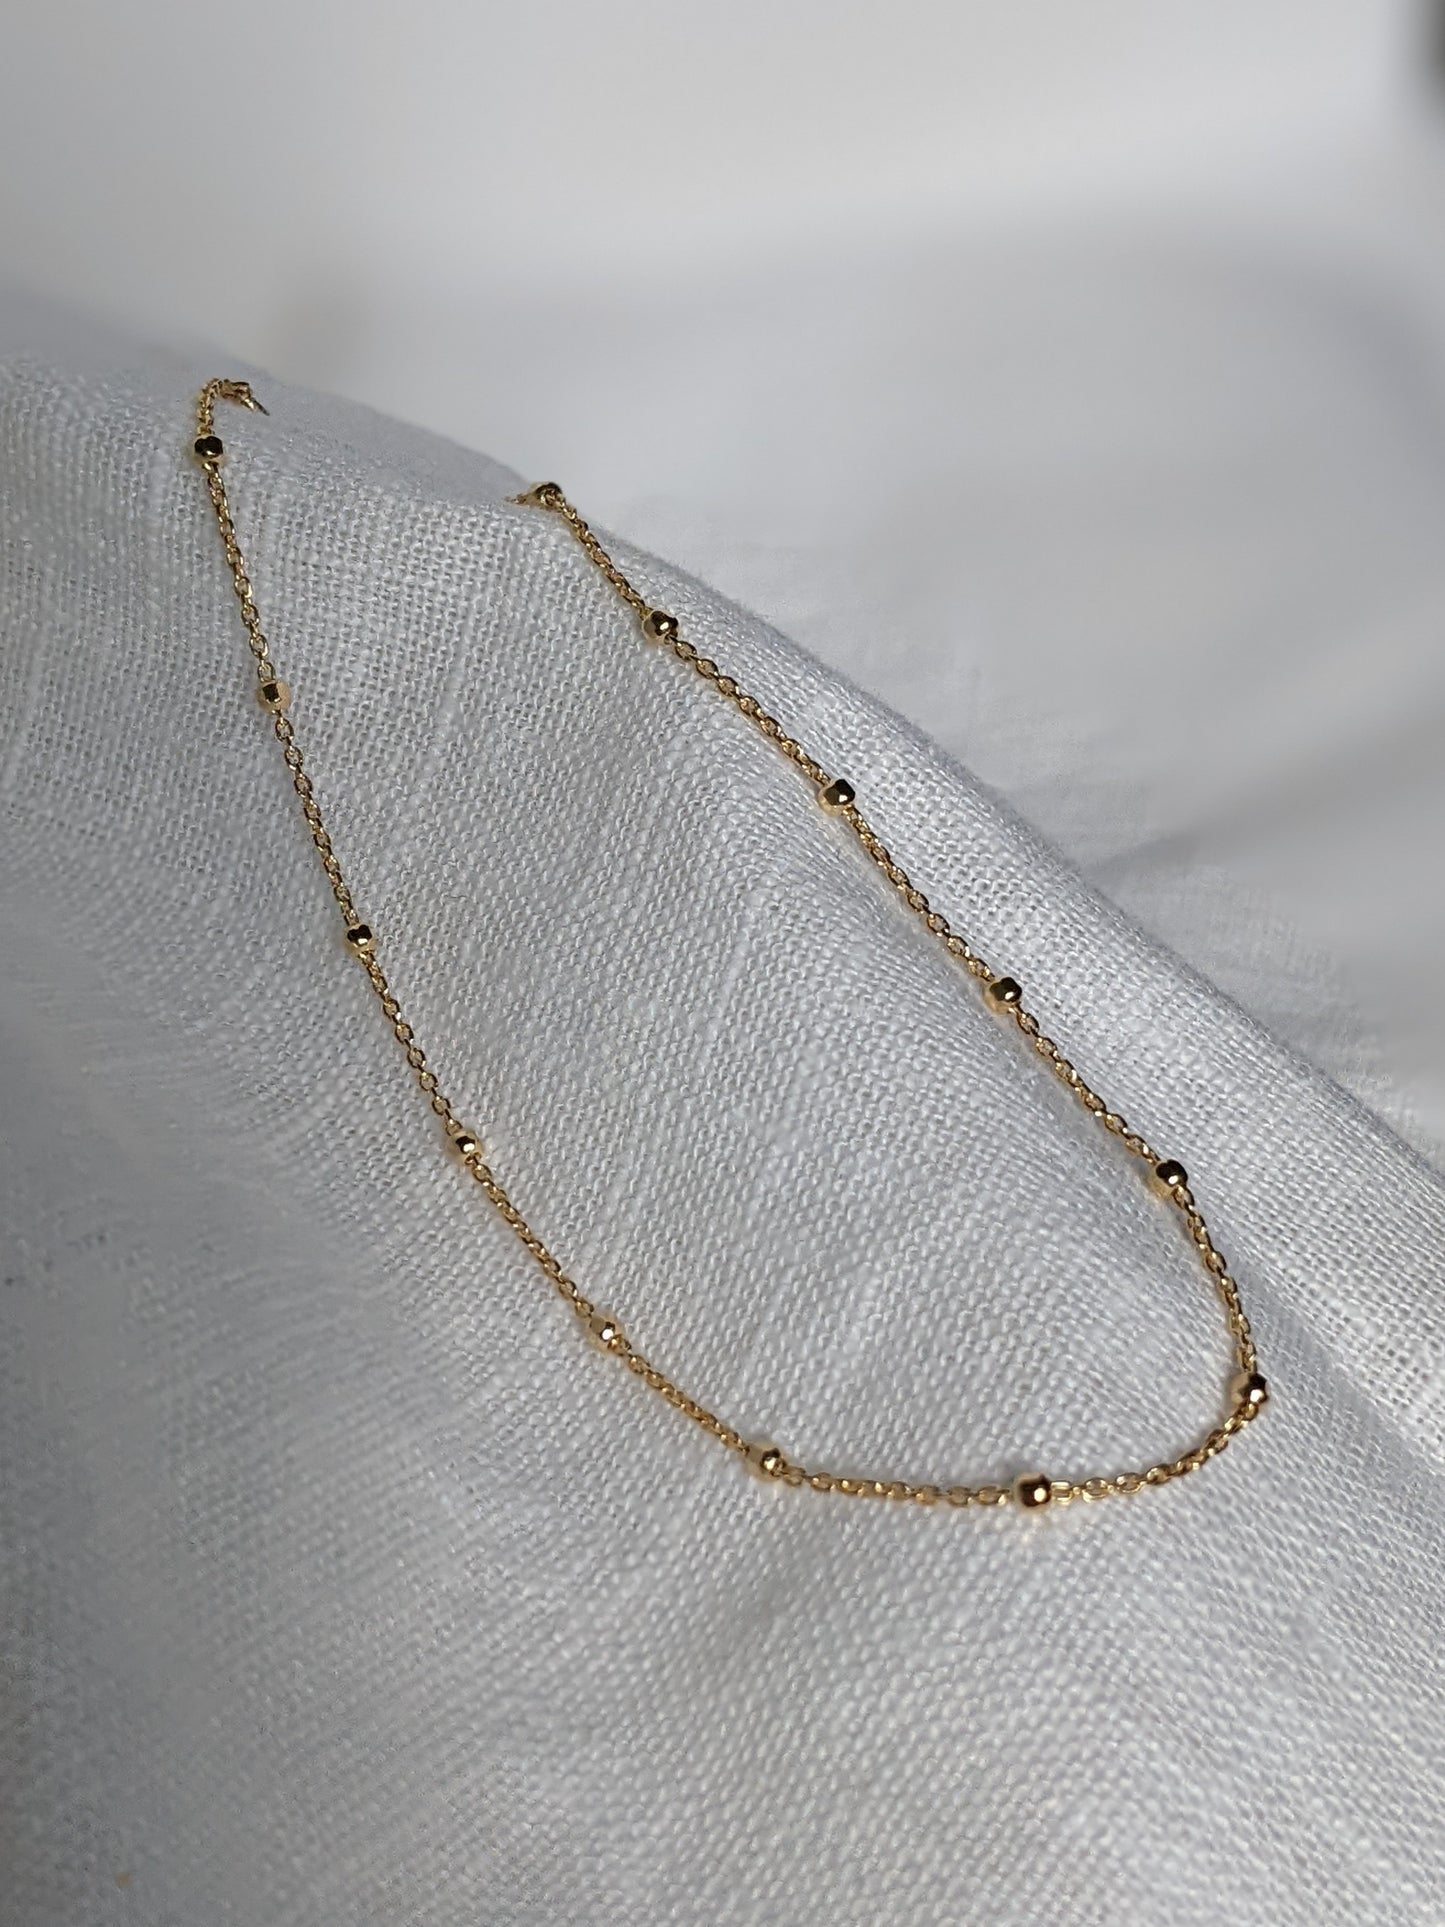 Estelle Chain in Gold Vermeil Necklace, Bracelet and Anklet